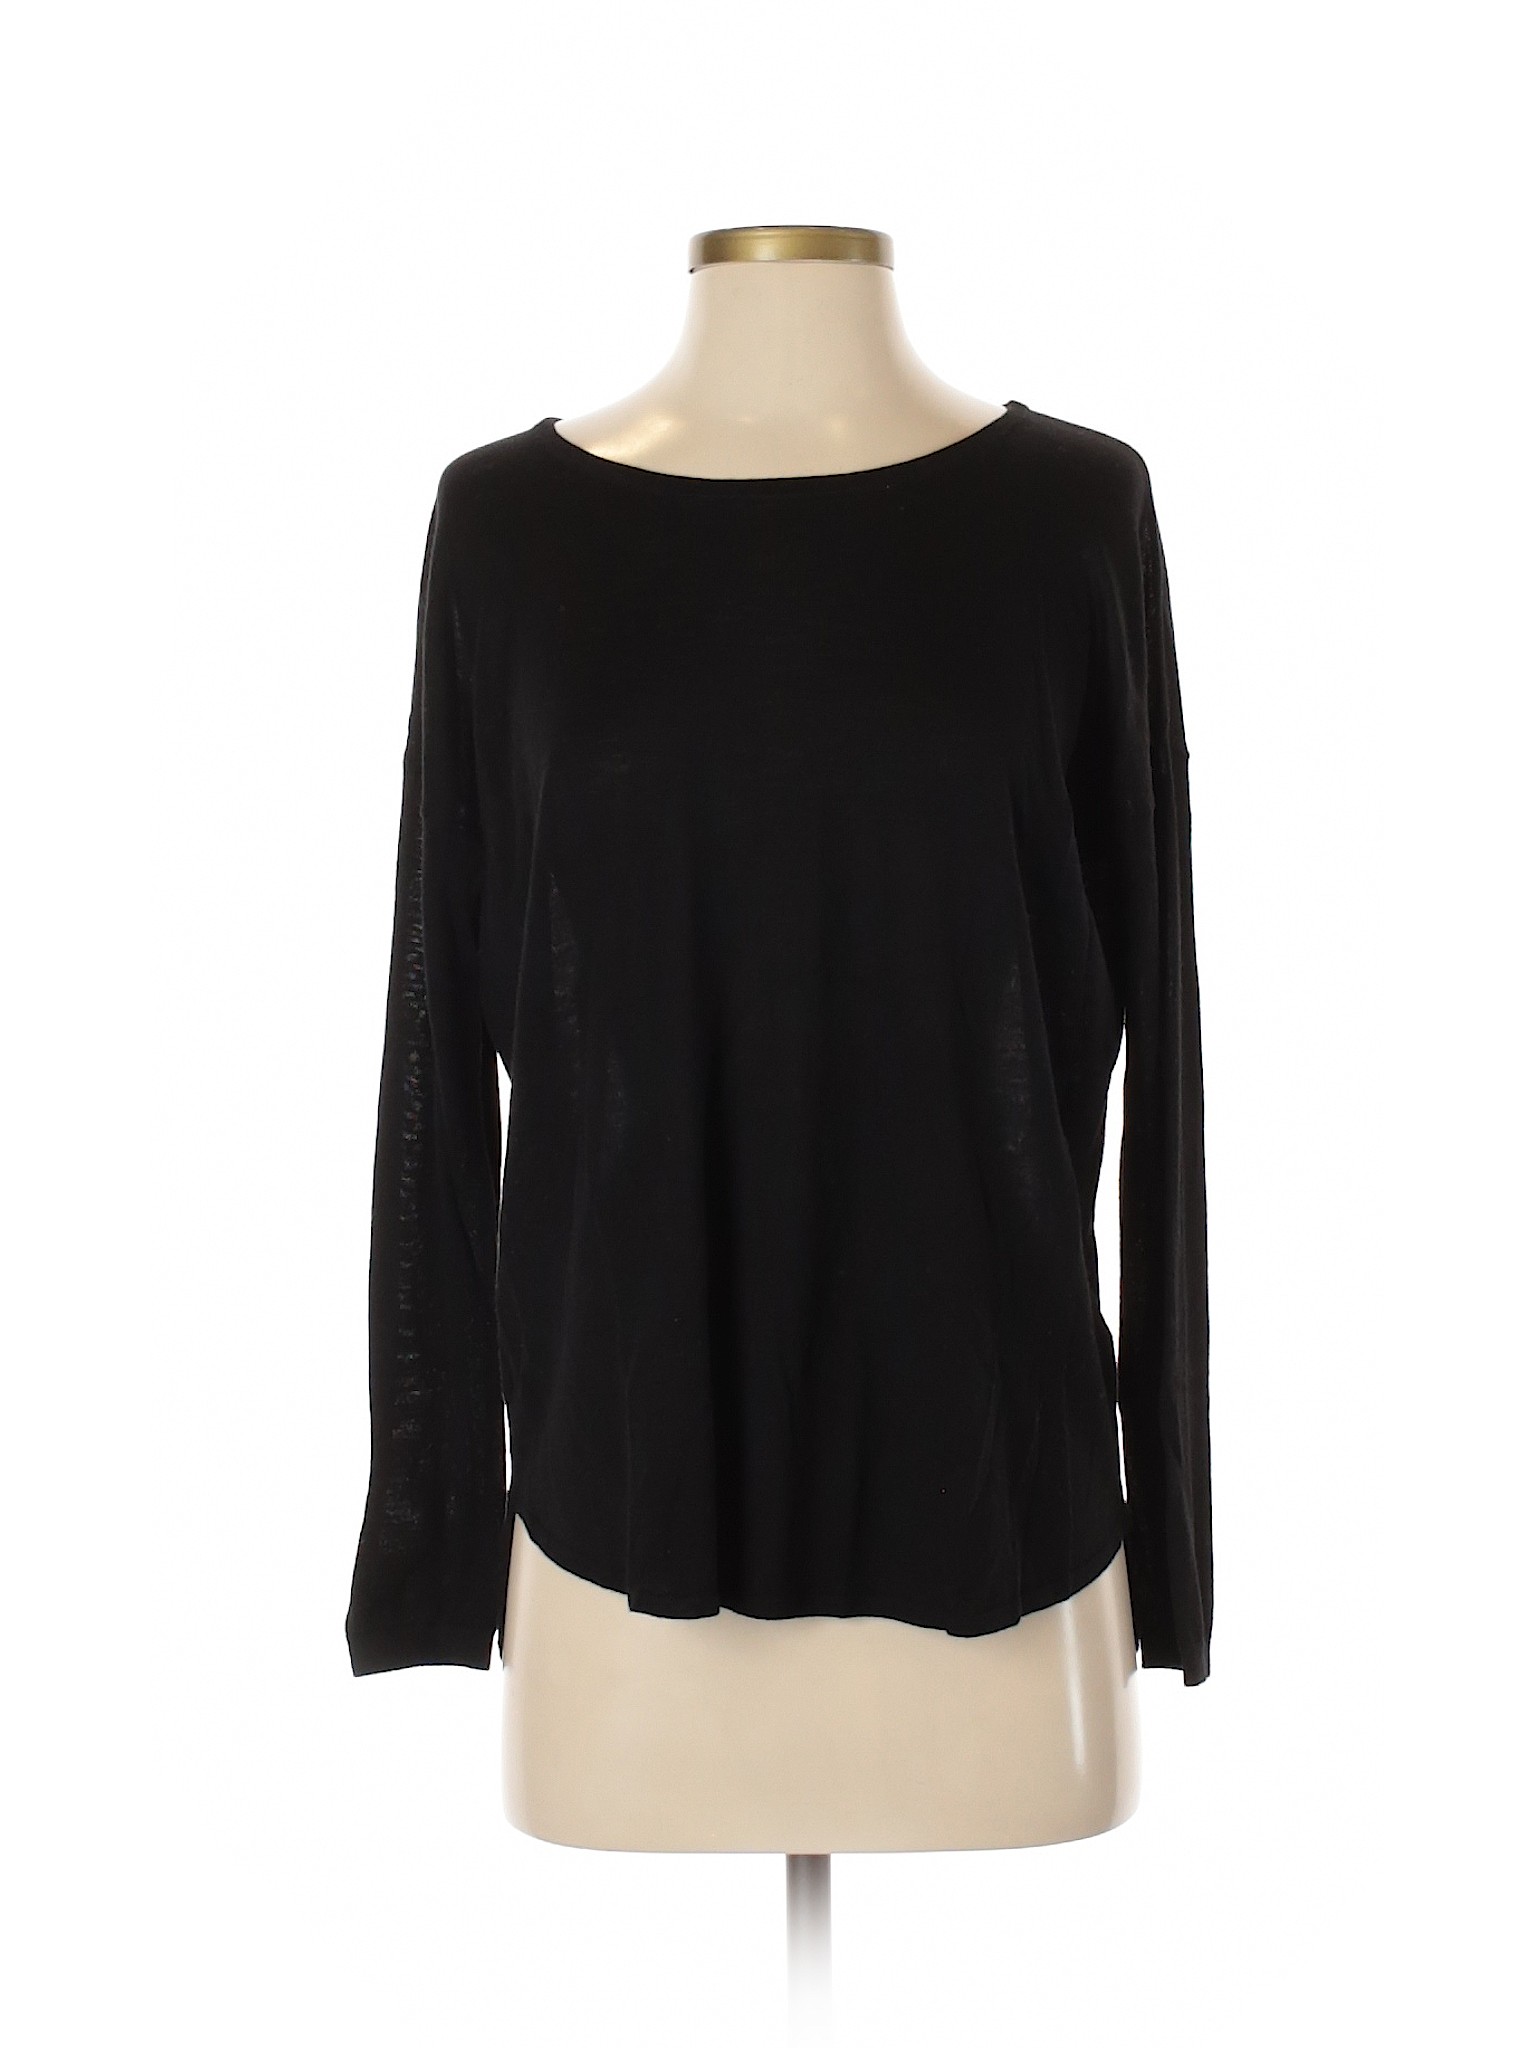 H&M Women Black Long Sleeve Top S | eBay